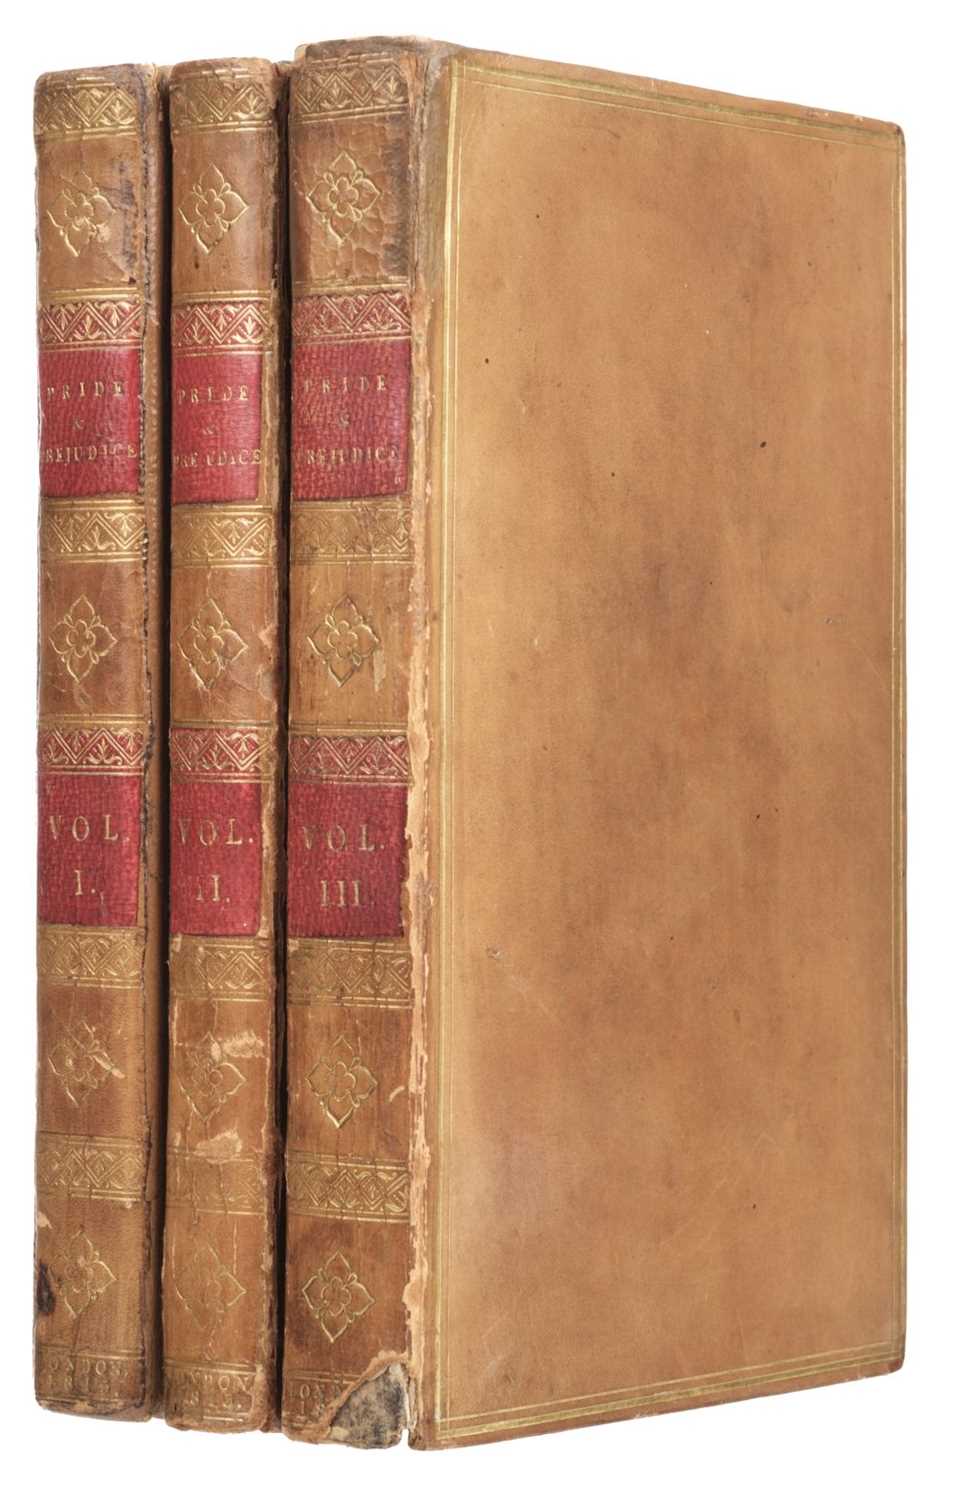 581 - Austen, Jane. Pride and Prejudice: A Novel... 3 volumes, 1st edition, 1813